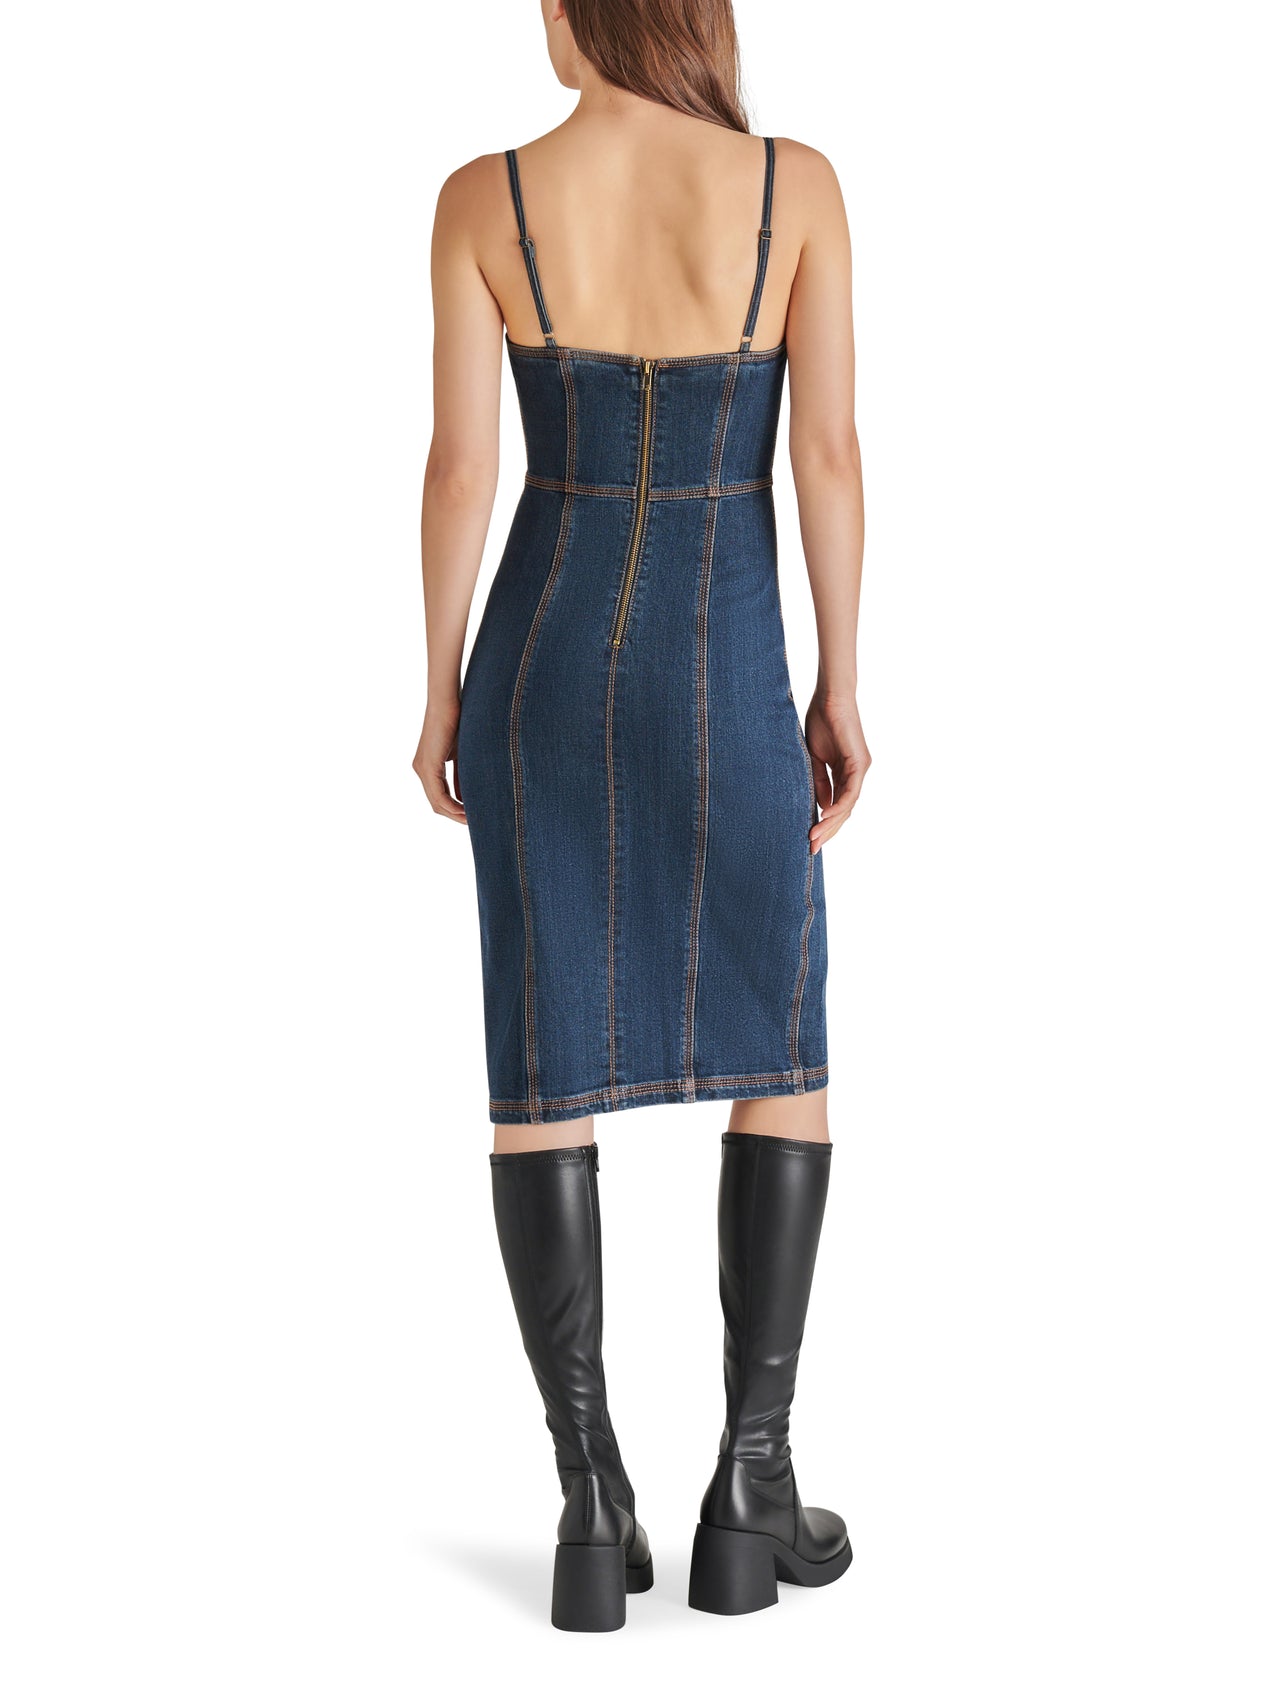 Giselle Dress, Midi Dress by Steve Madden | LIT Boutique